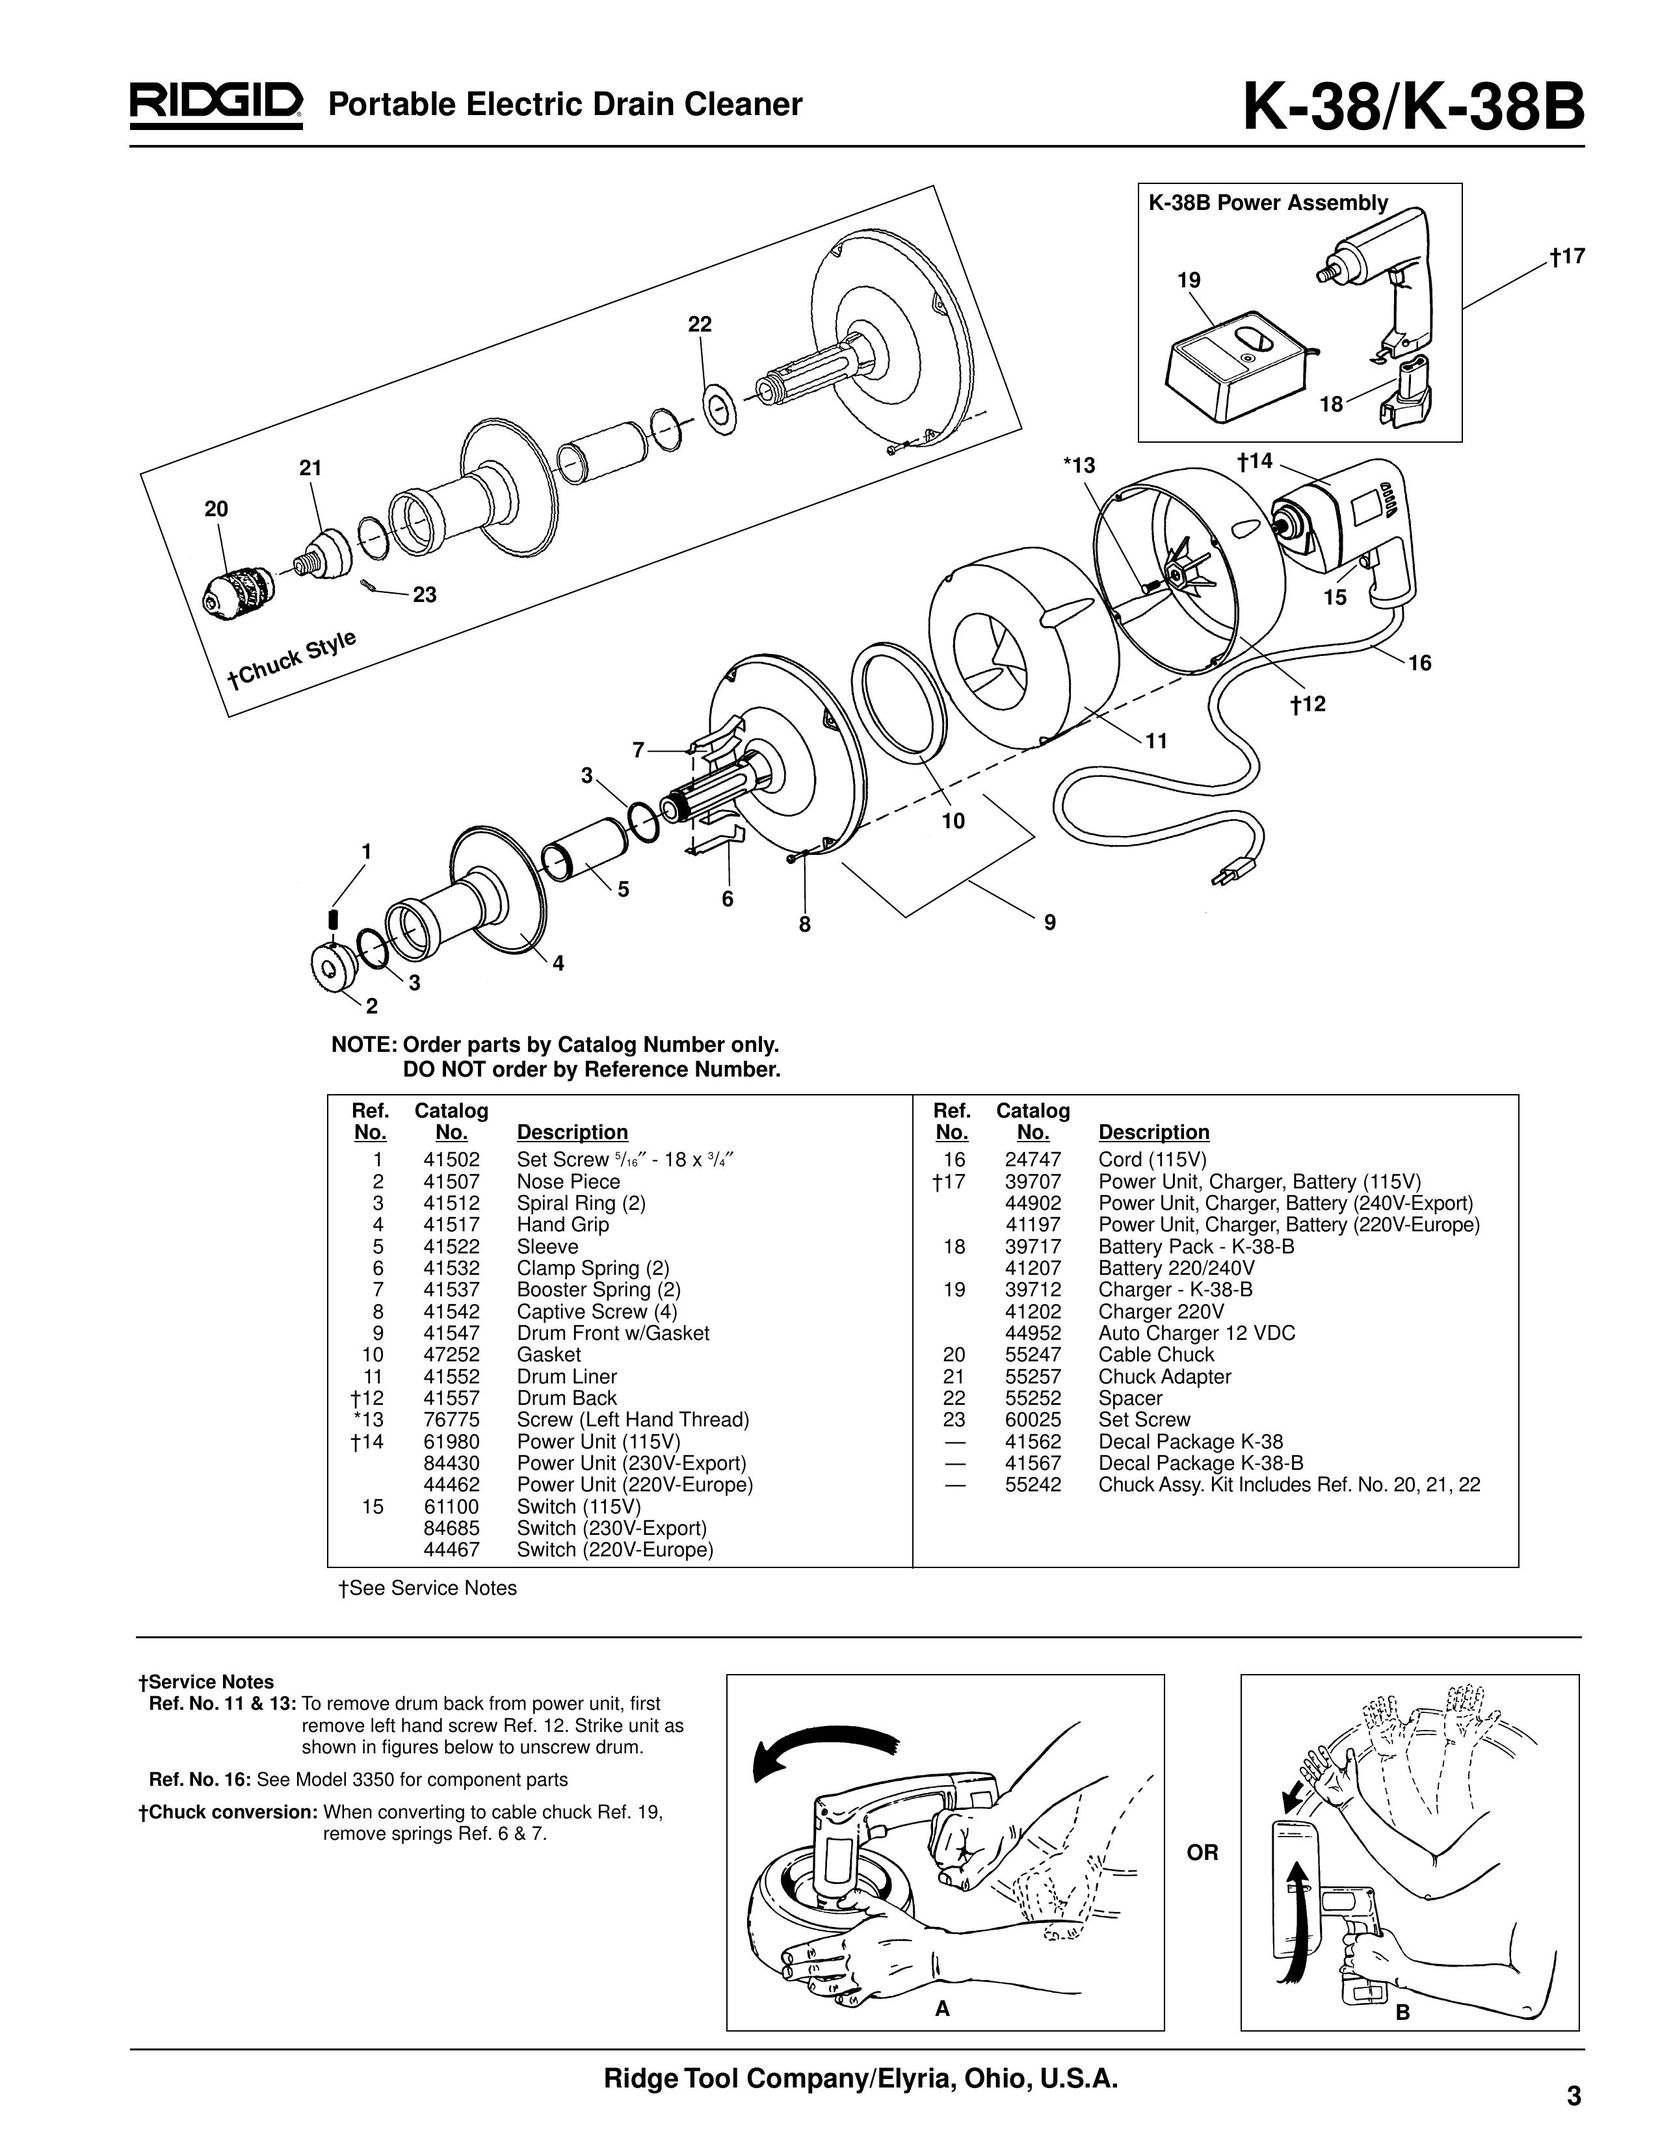 RIDGID K-38 Plumbing Product User Manual